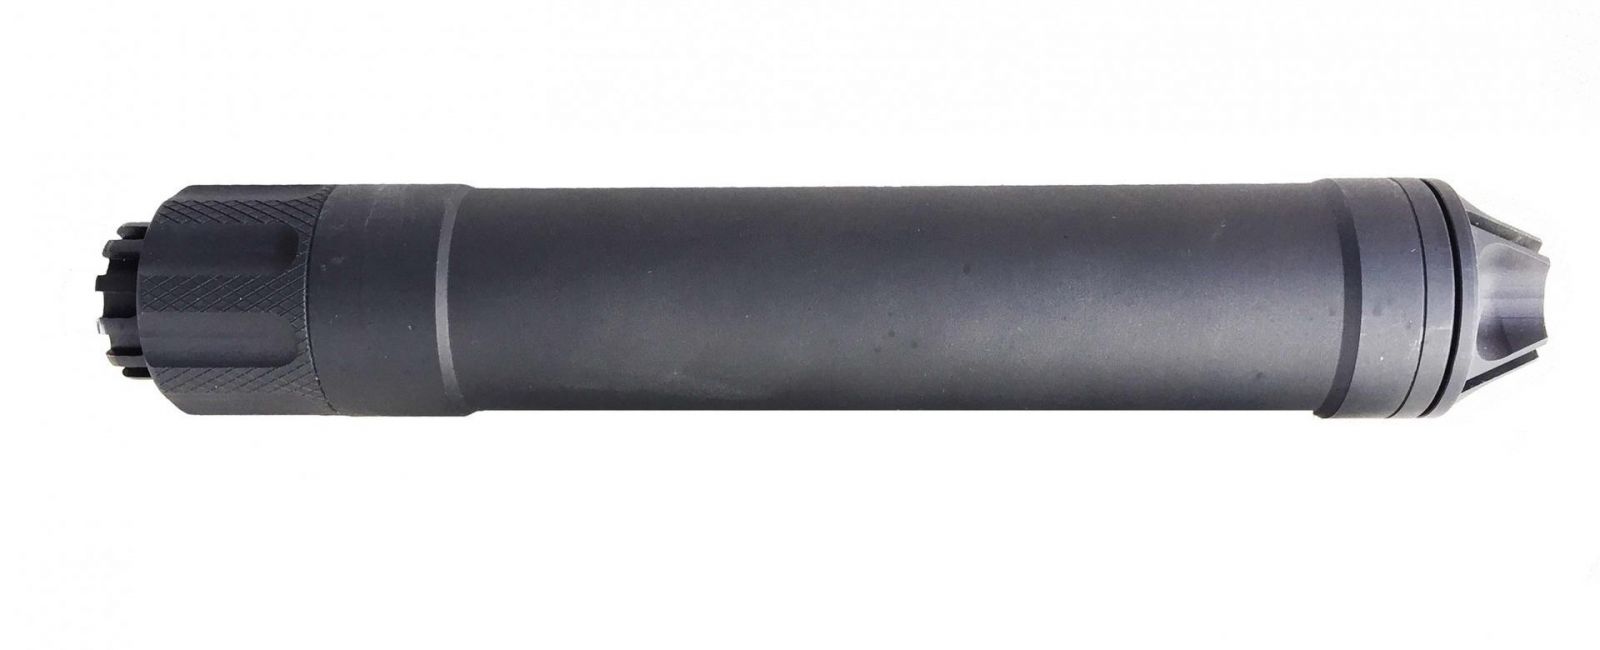 Tlumič G.I.S. CSR9 - ráže 9 x 19 mm, ocelový, 1/2x36